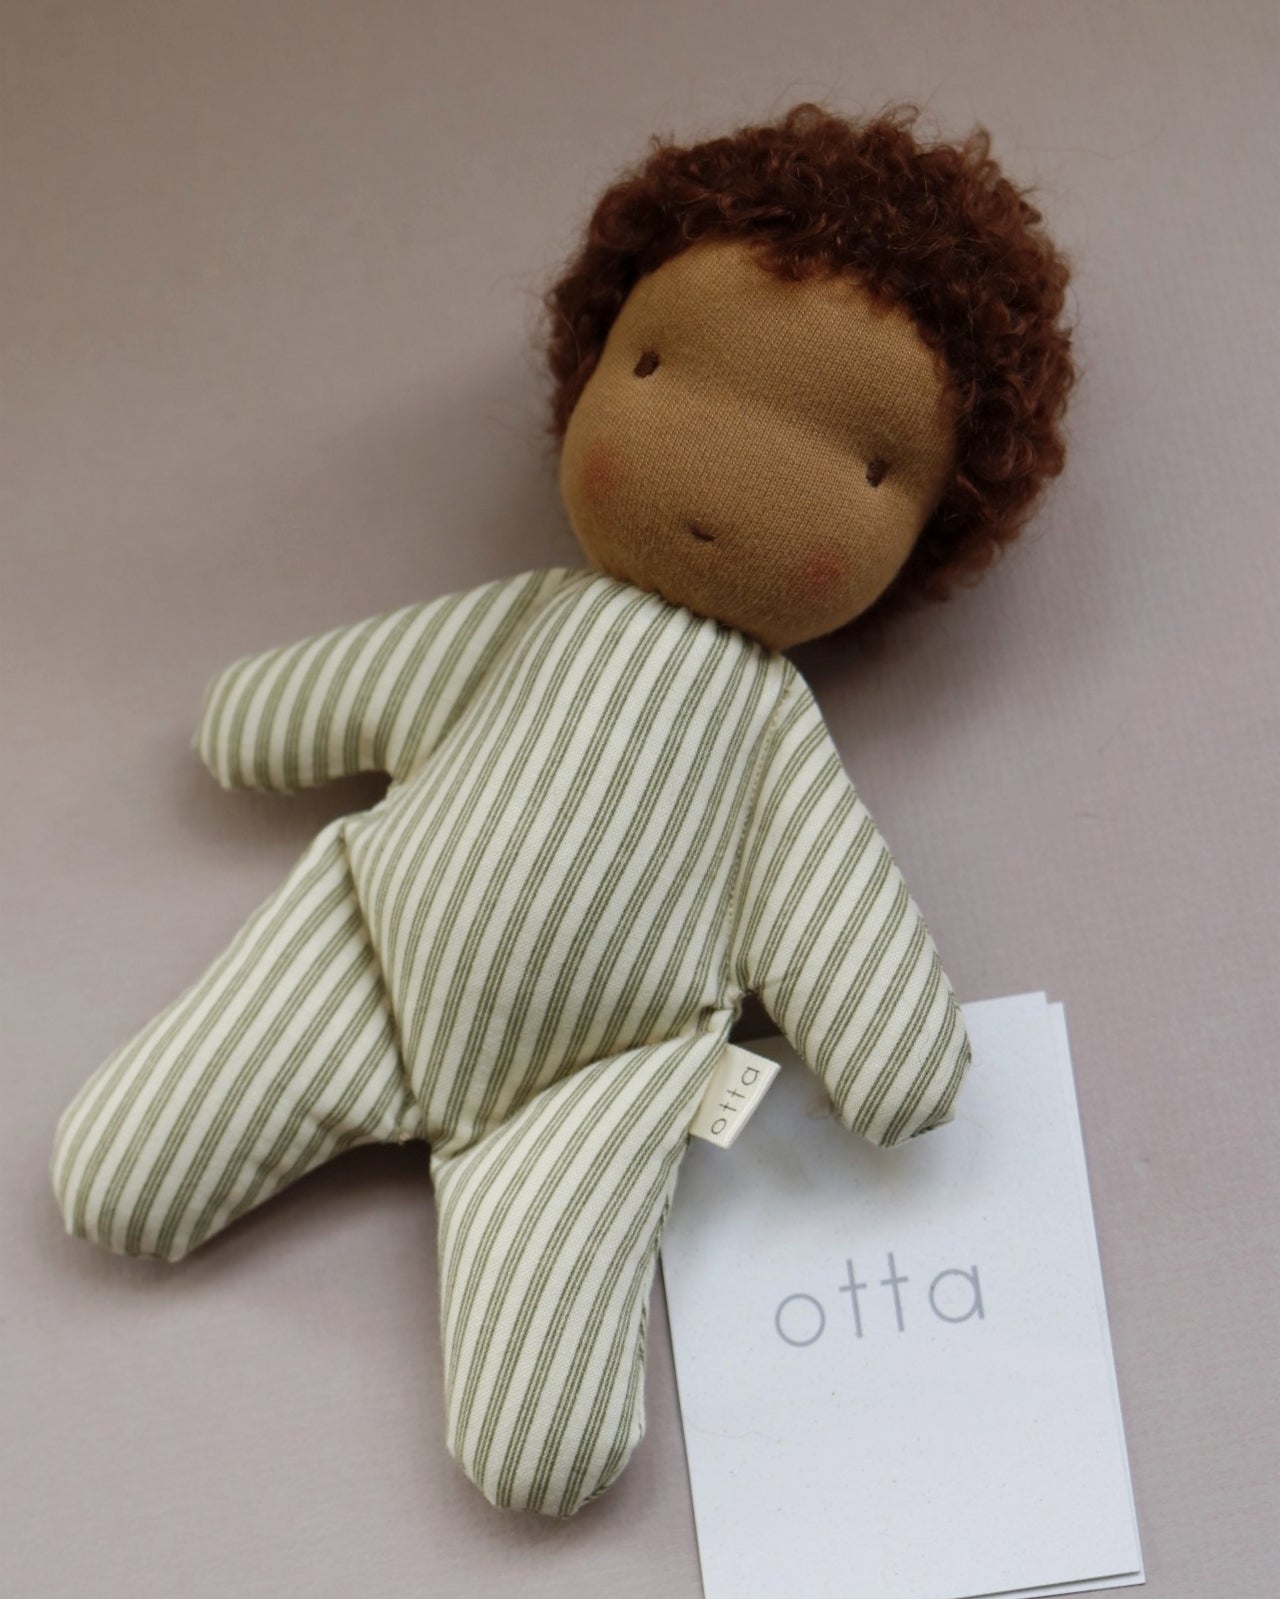 Otta Doll "Little Brother" 2